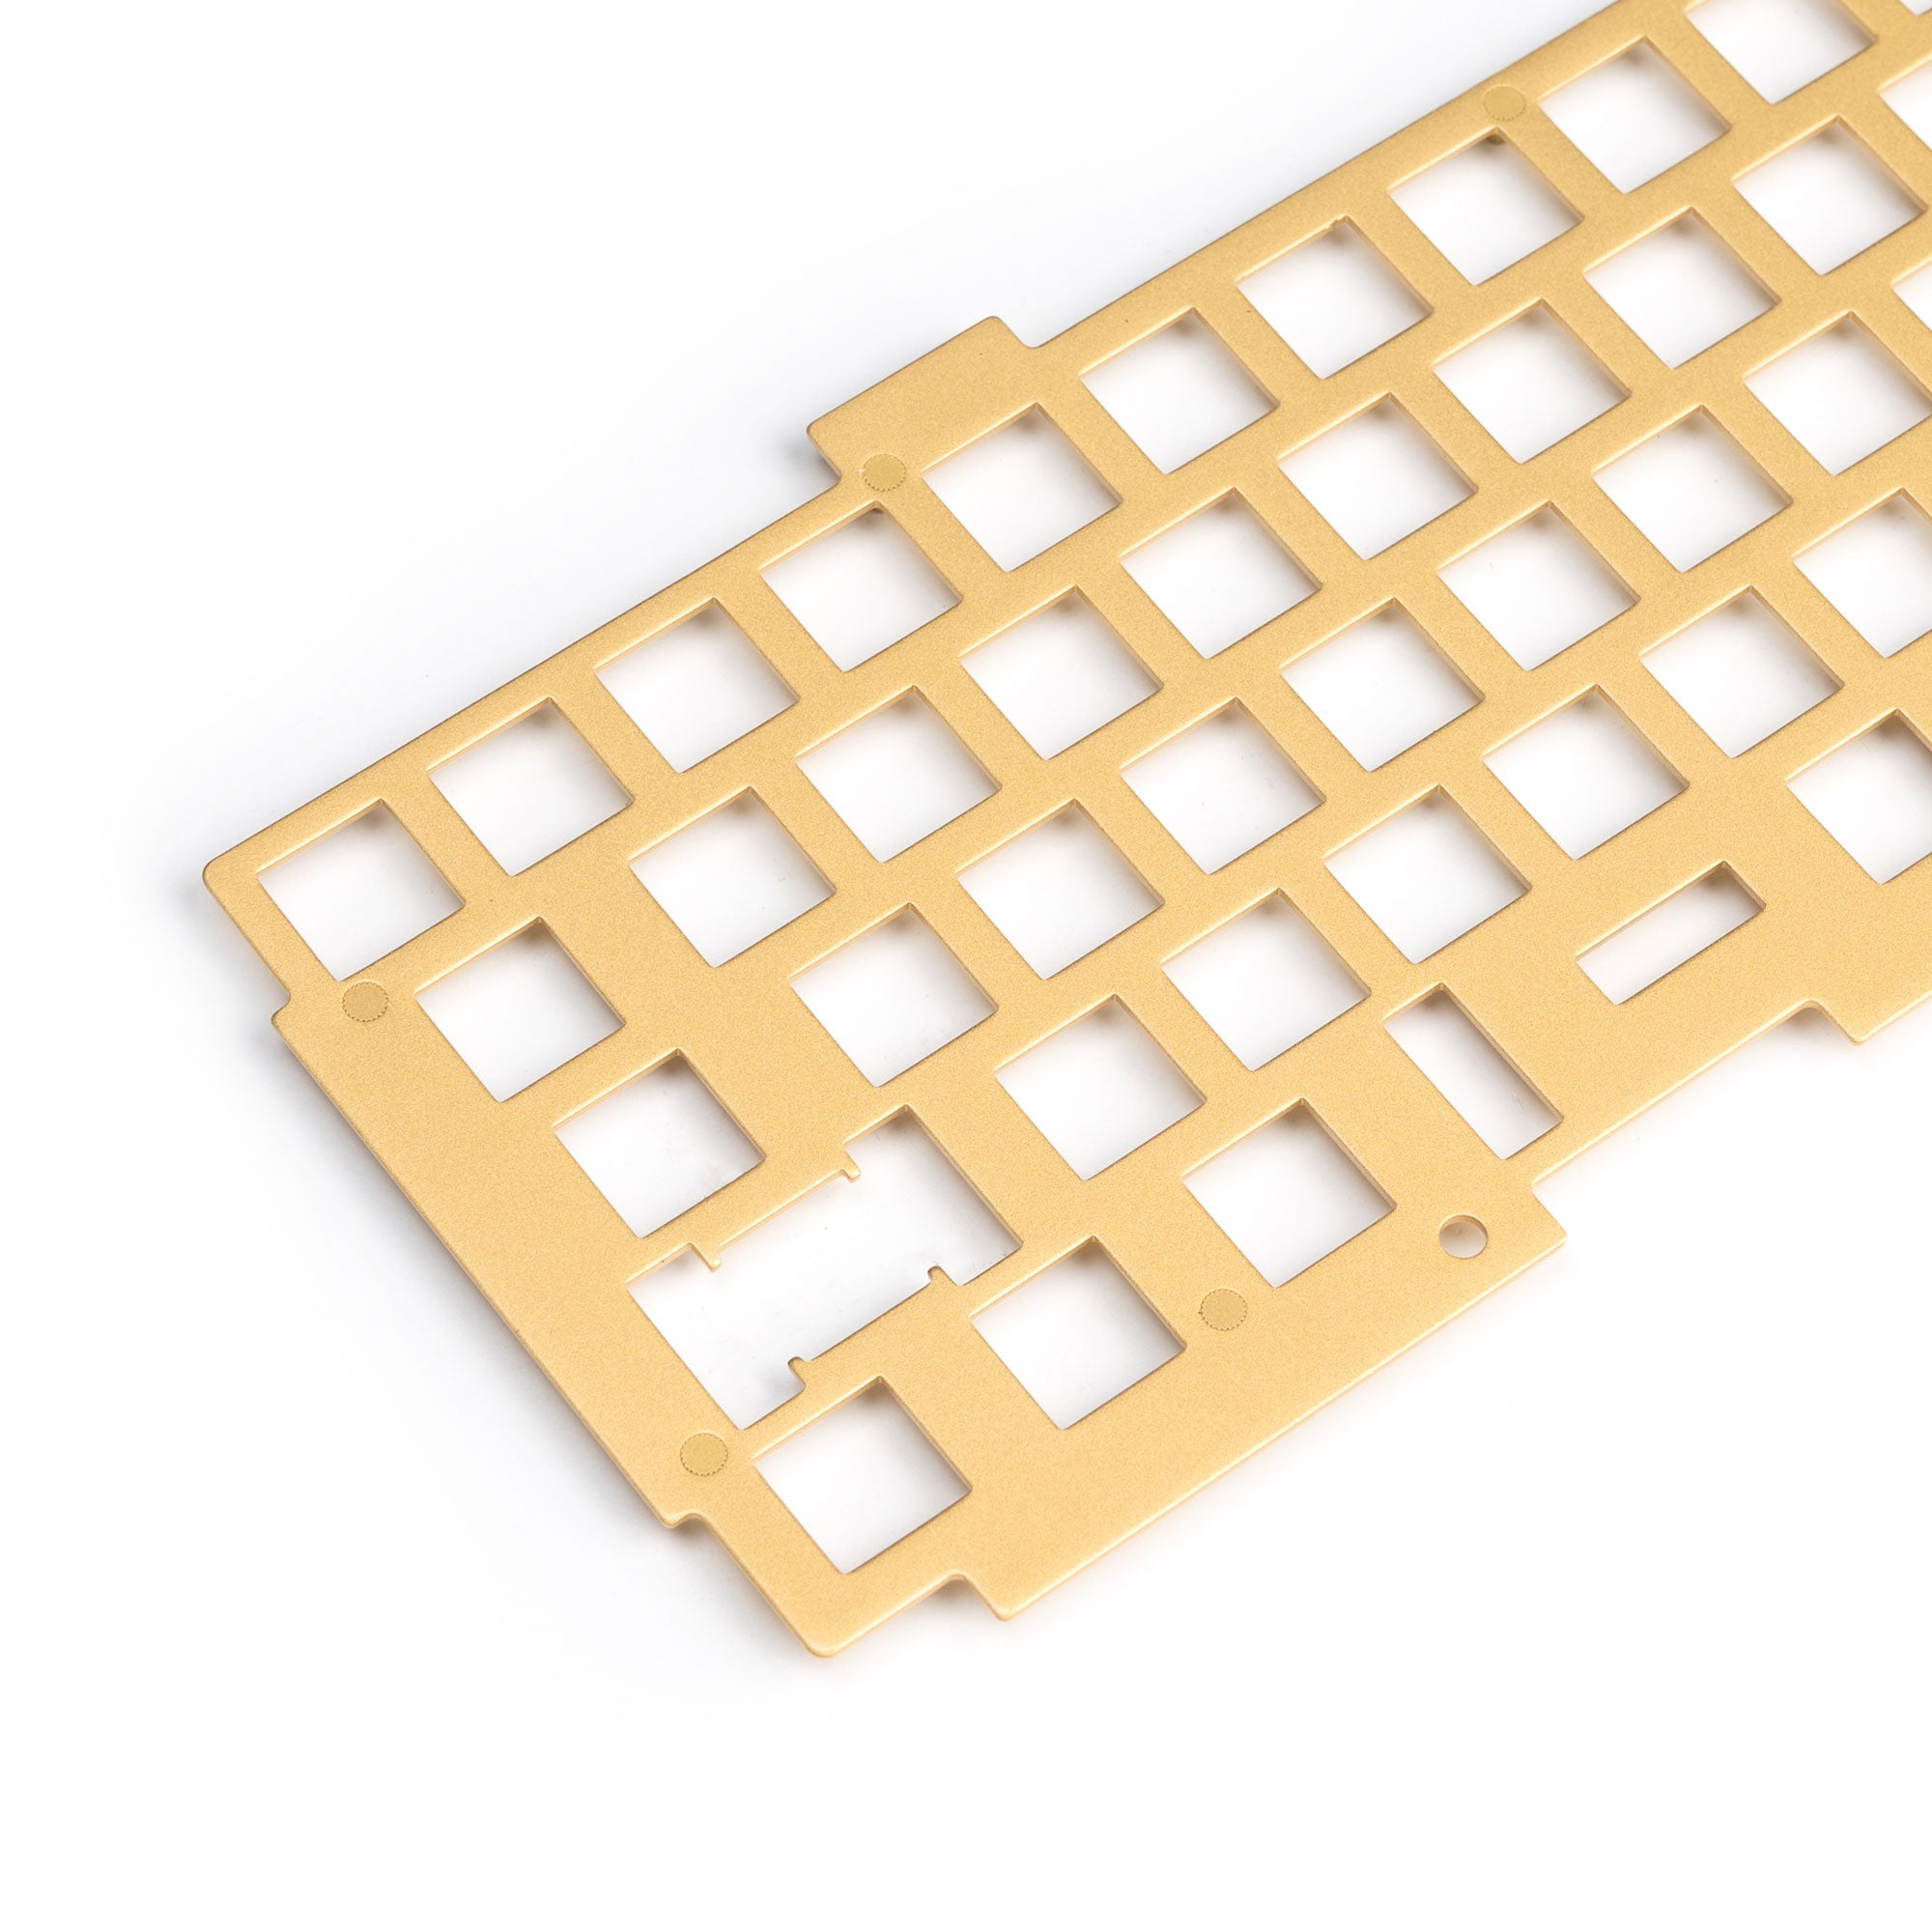 Q4 Pro Brass Plate – Keychron | Mechanical Keyboards for Mac, Windows ...